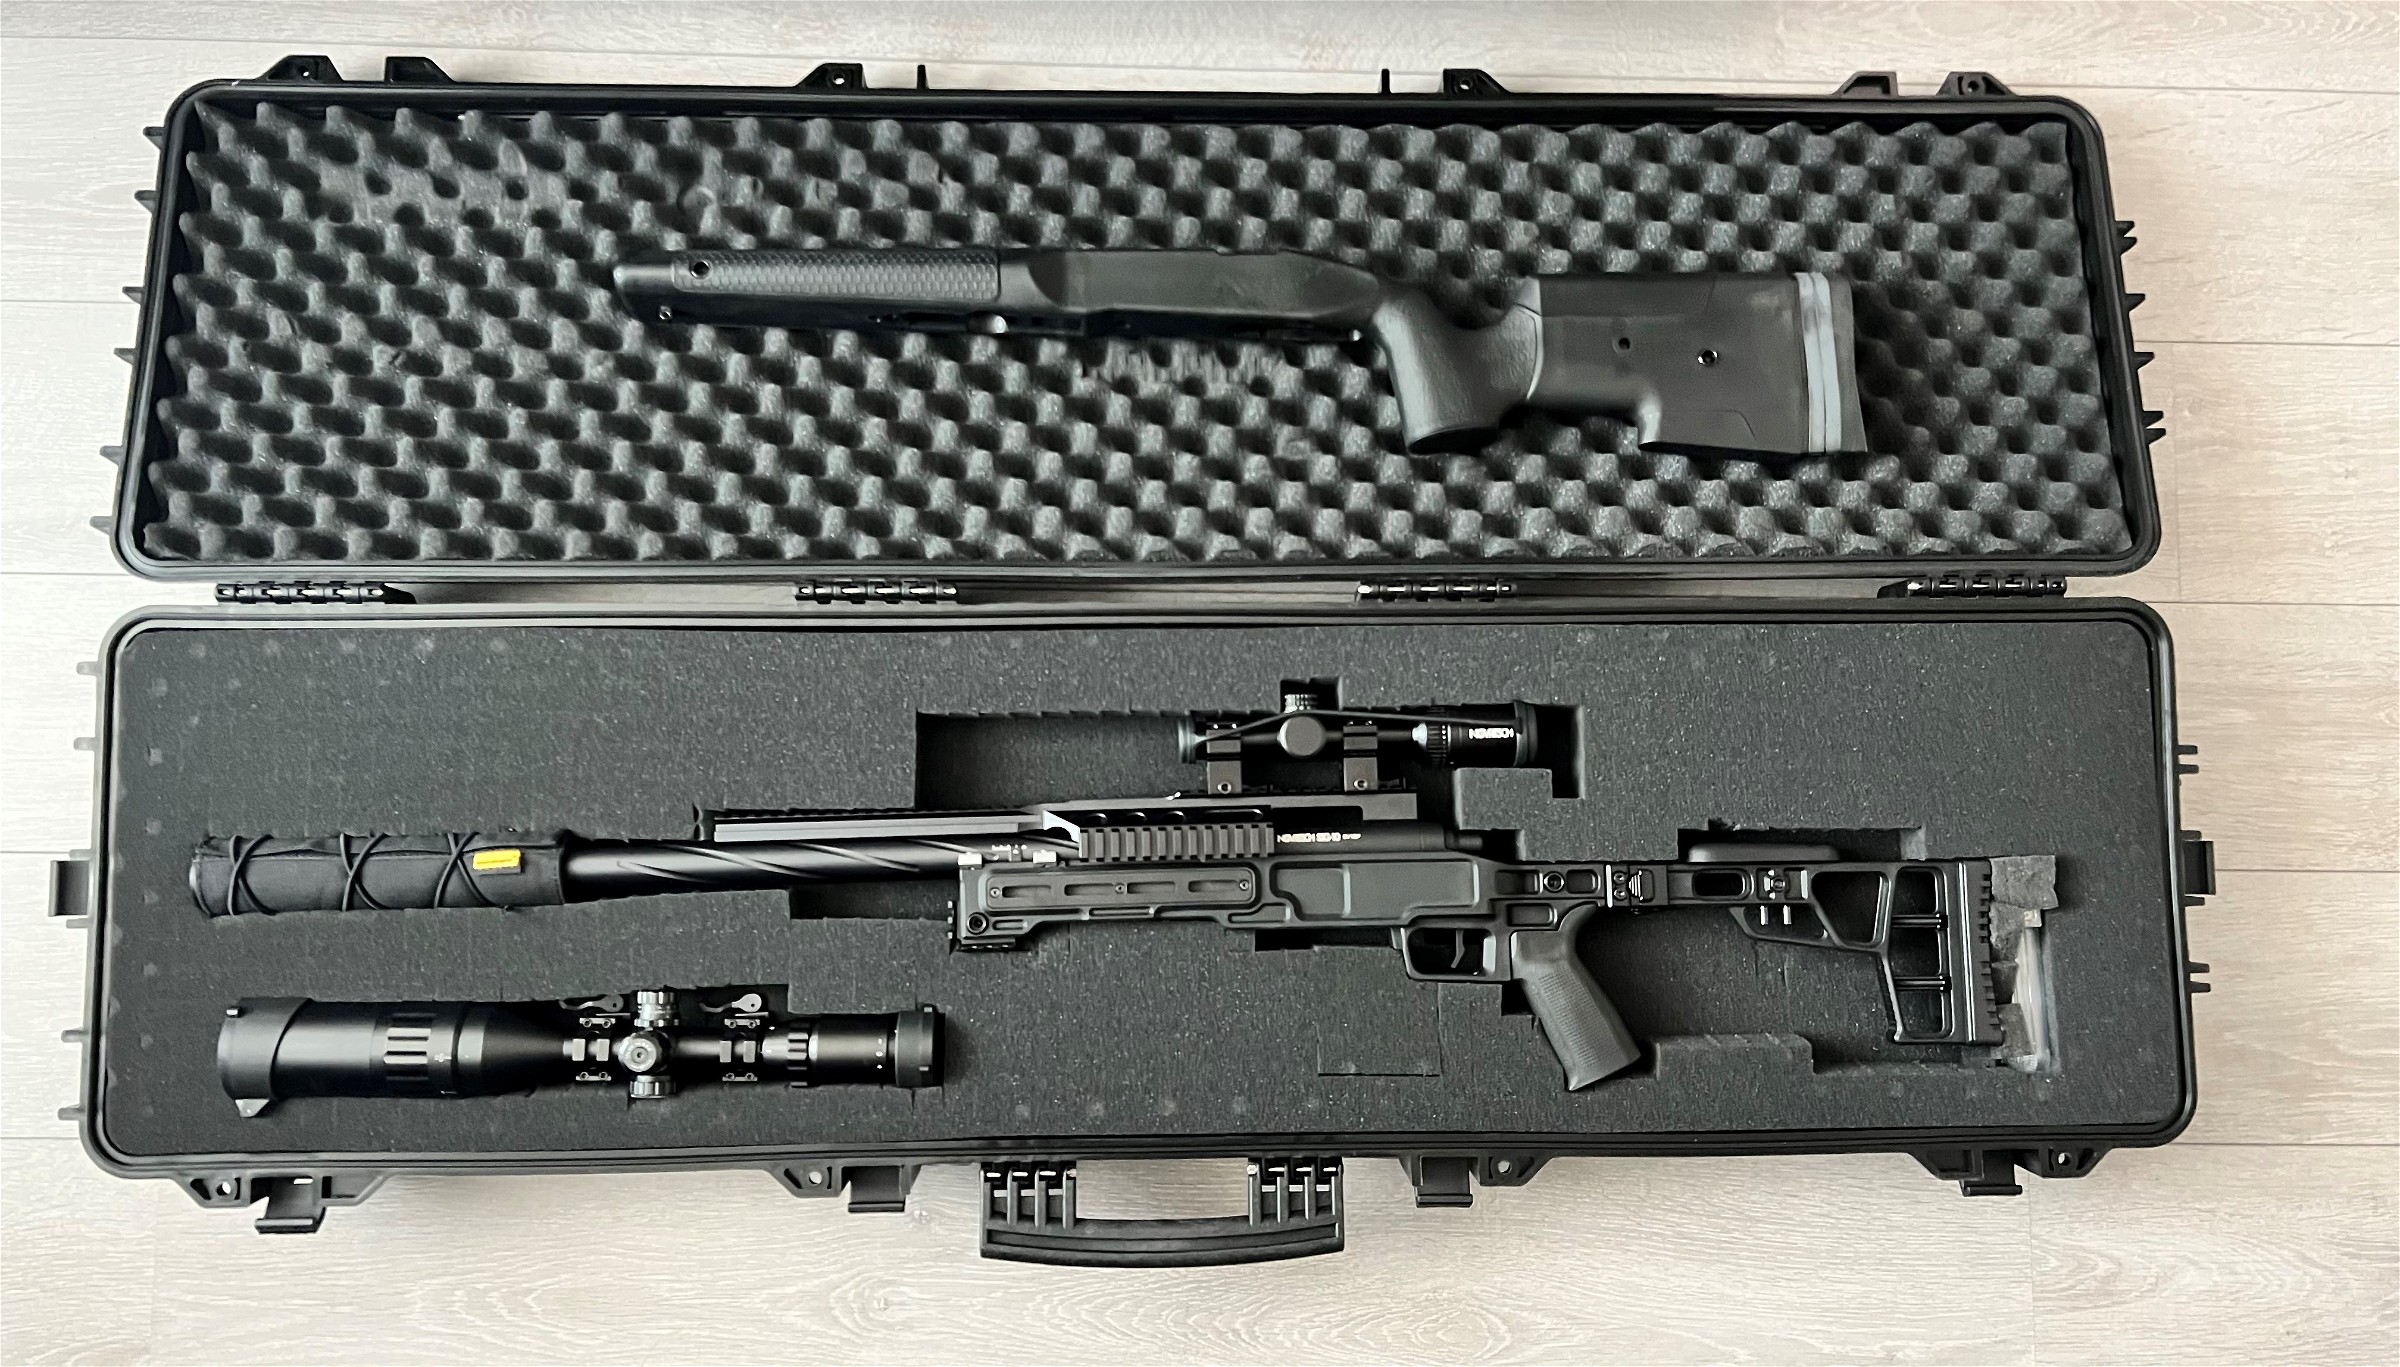 SSG10 A3 Airsoft Sniper Rifle (short) plus SSG10 A2 stock